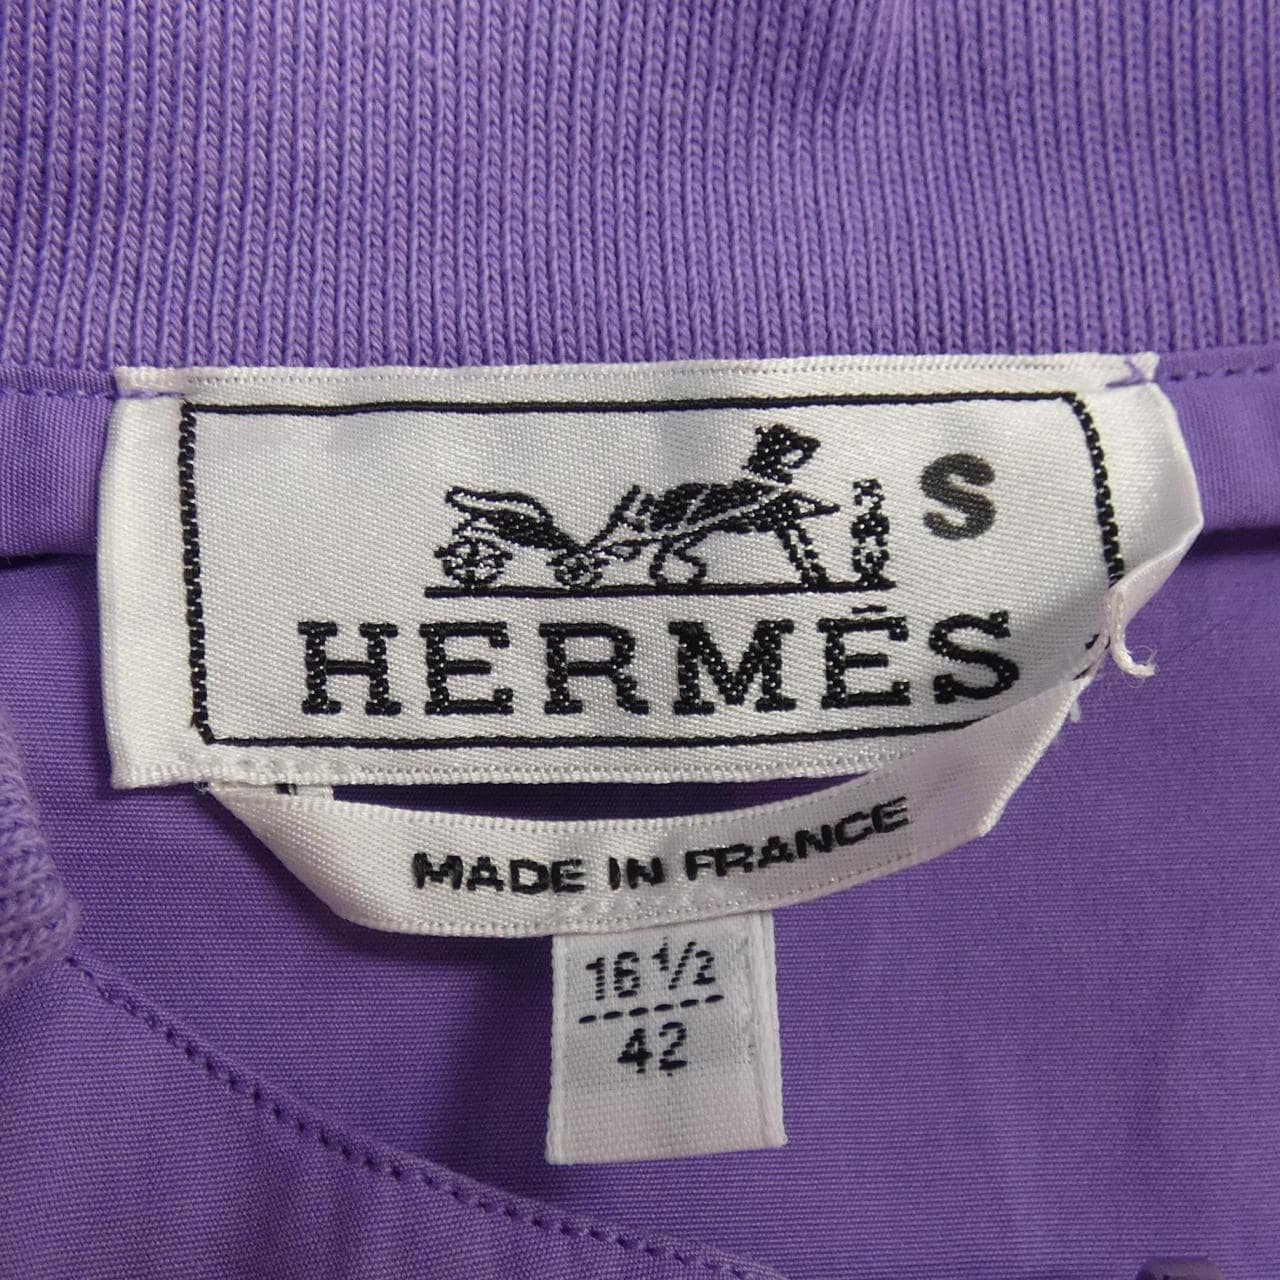 HERMES HERMES Tops